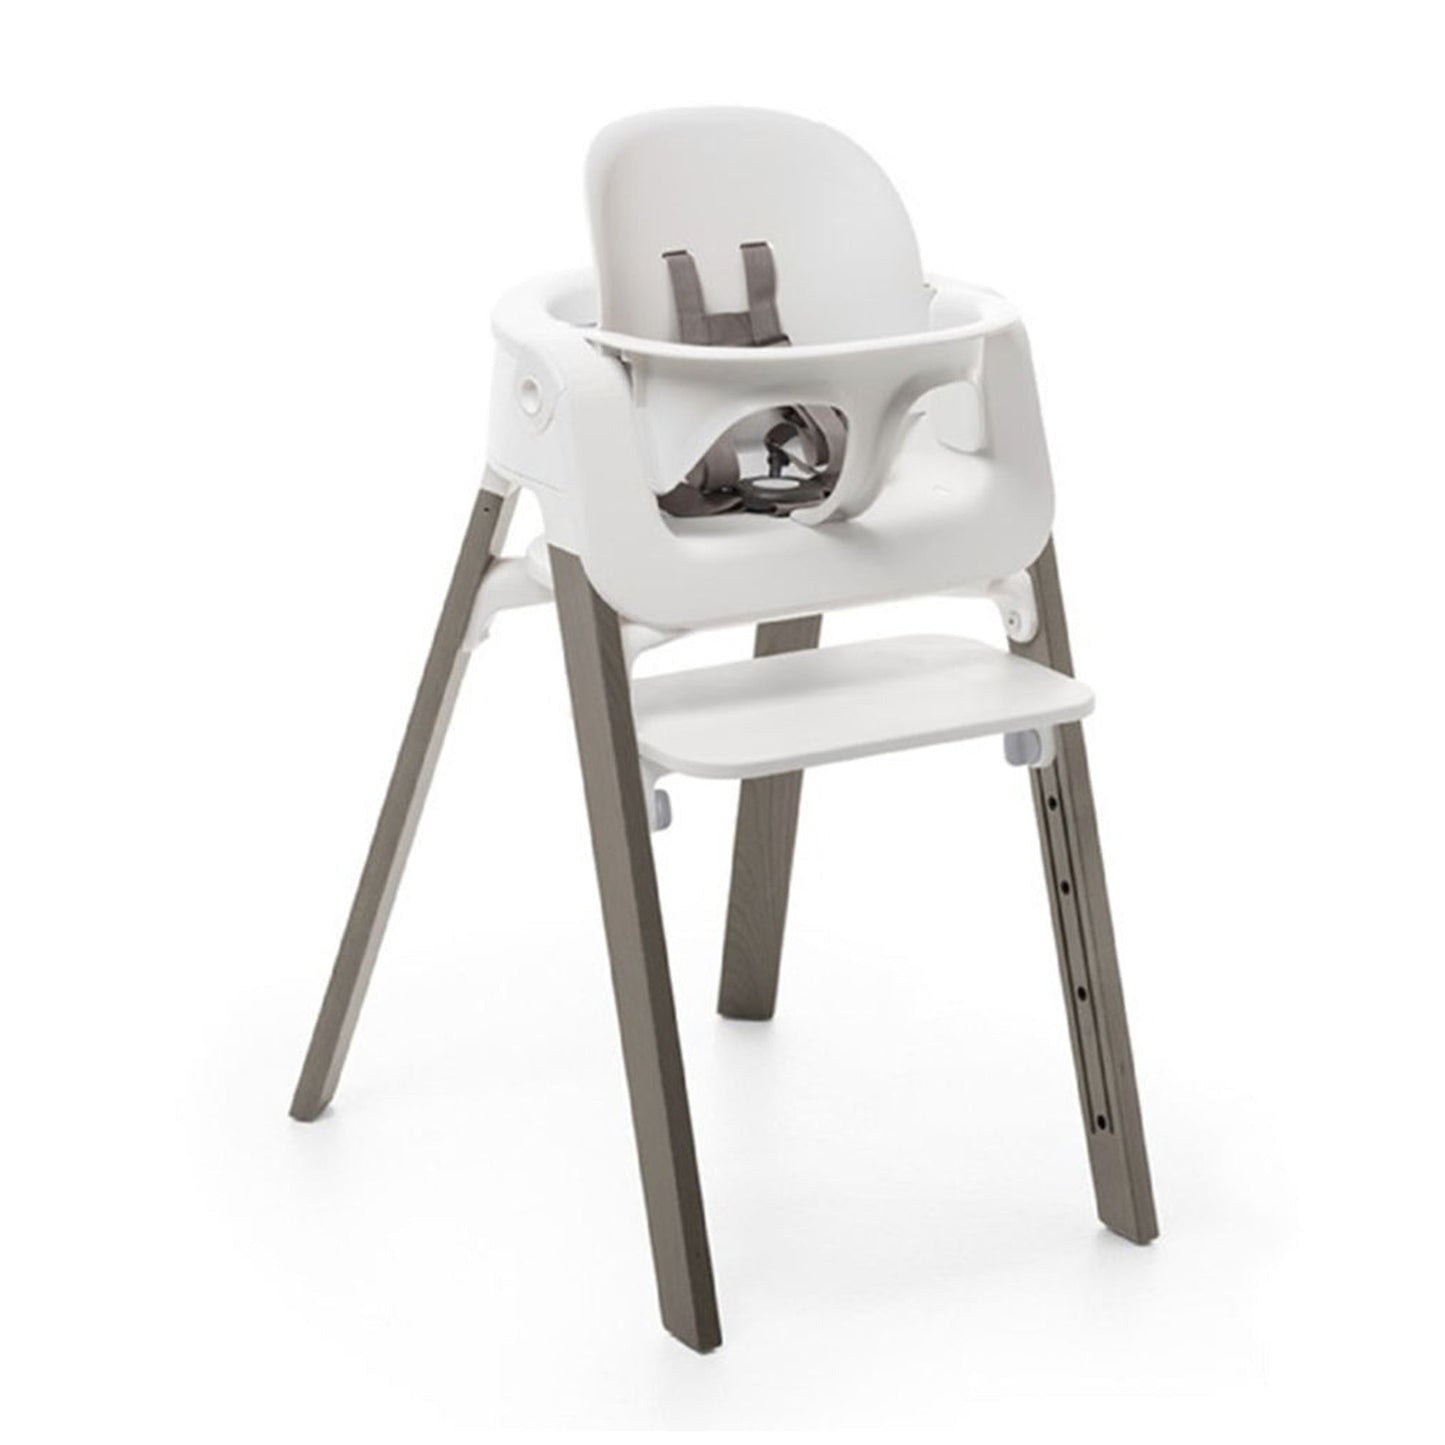 STOKKE Steps High Chair - Hazy Grey Legs / White Seat / White Babyset